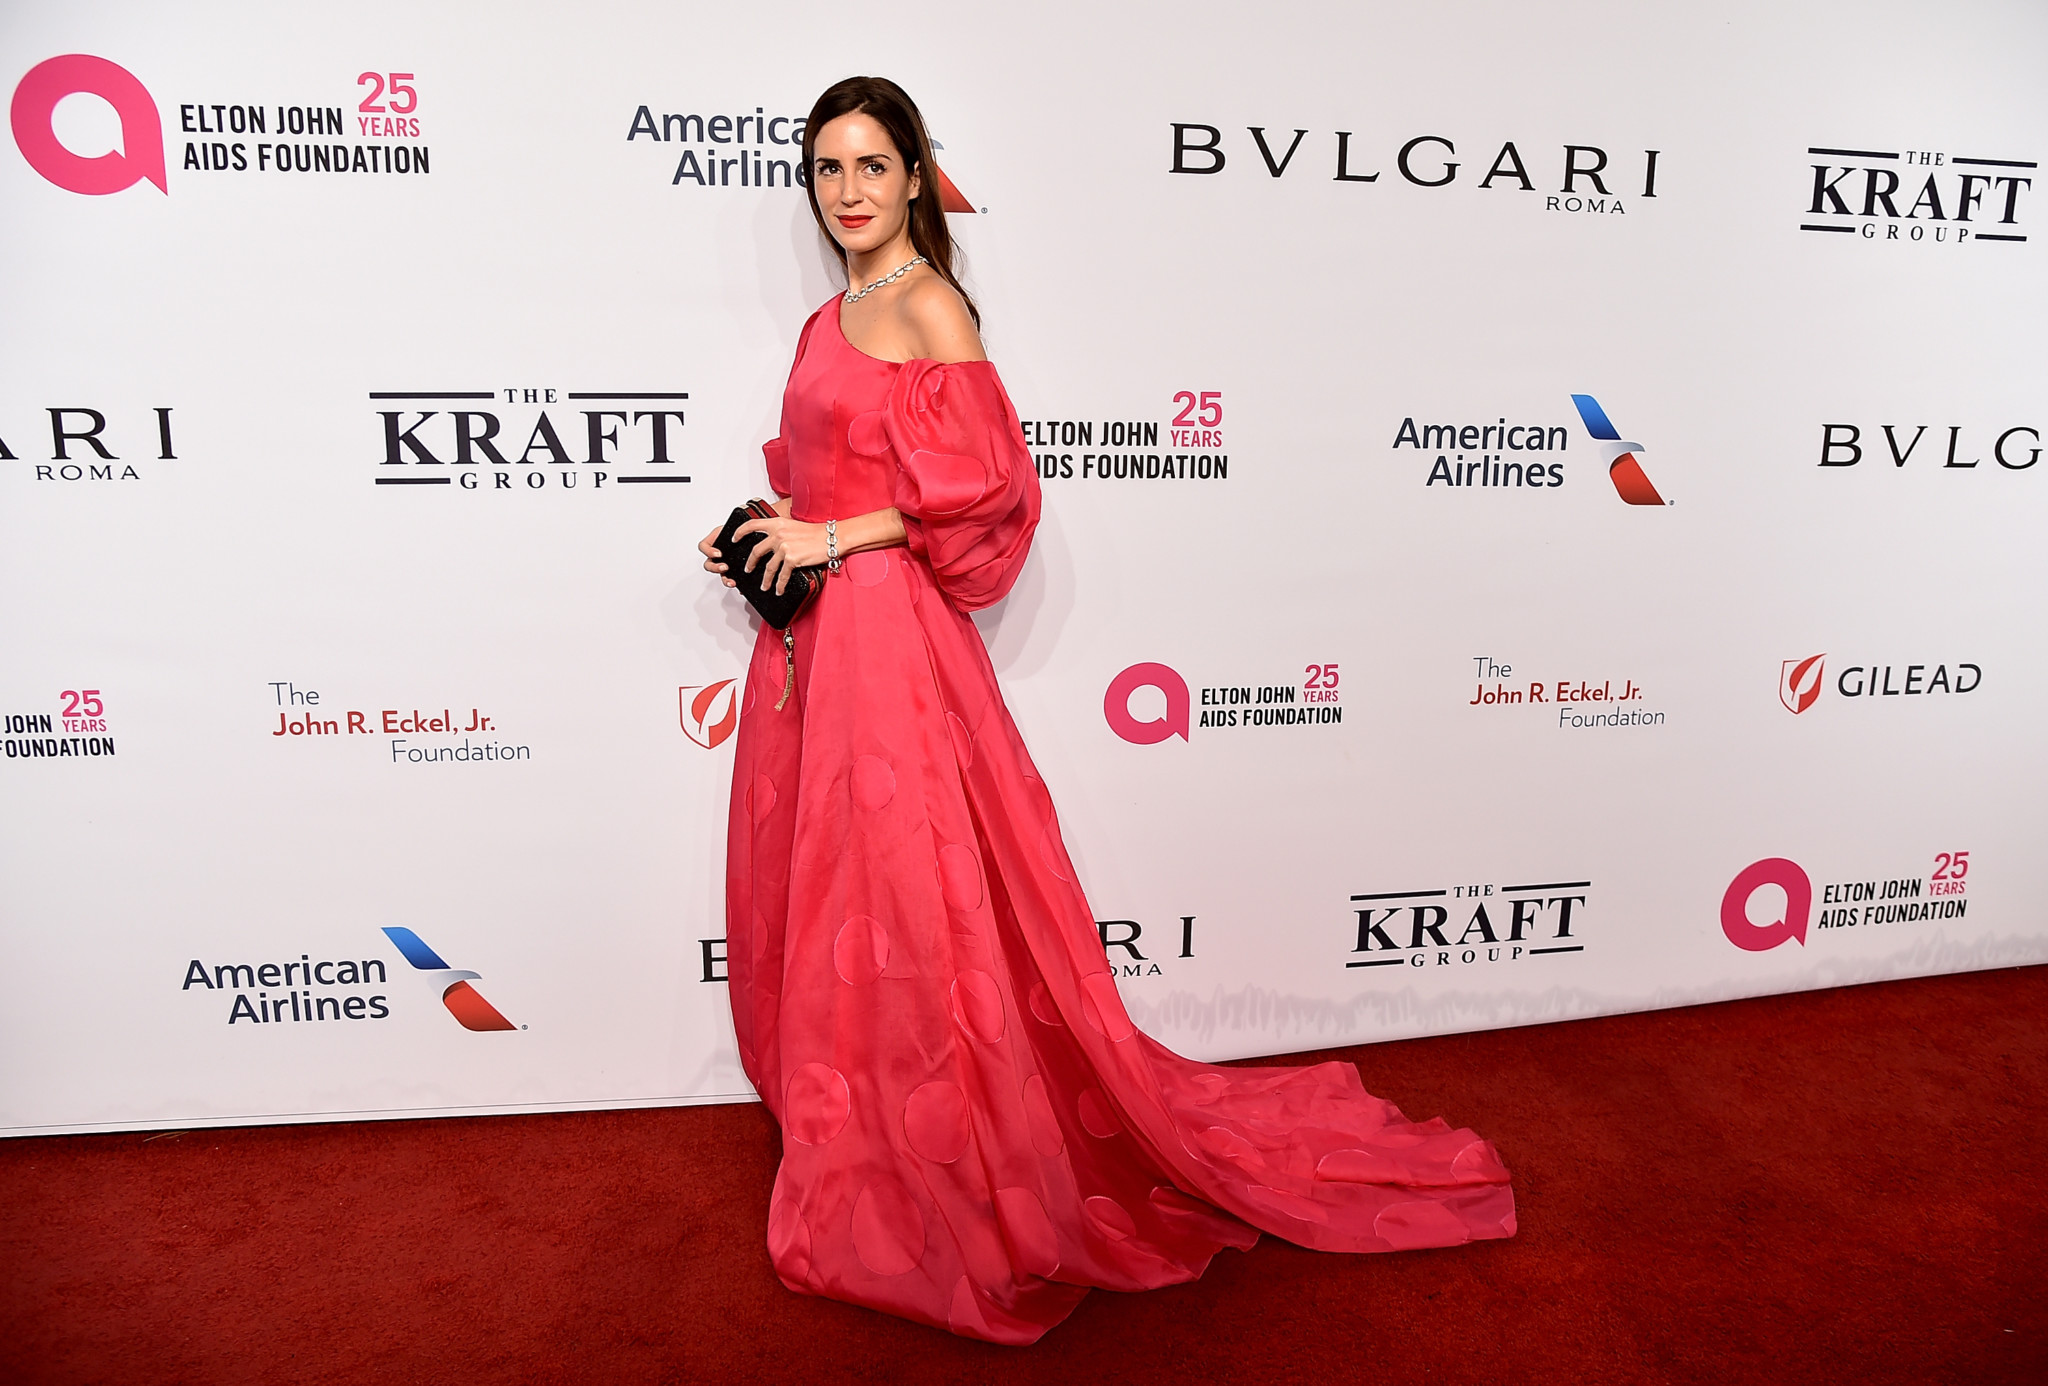 Bulgari helps Elton John AIDS Foundation raise nearly $4m at annual gala in  New York